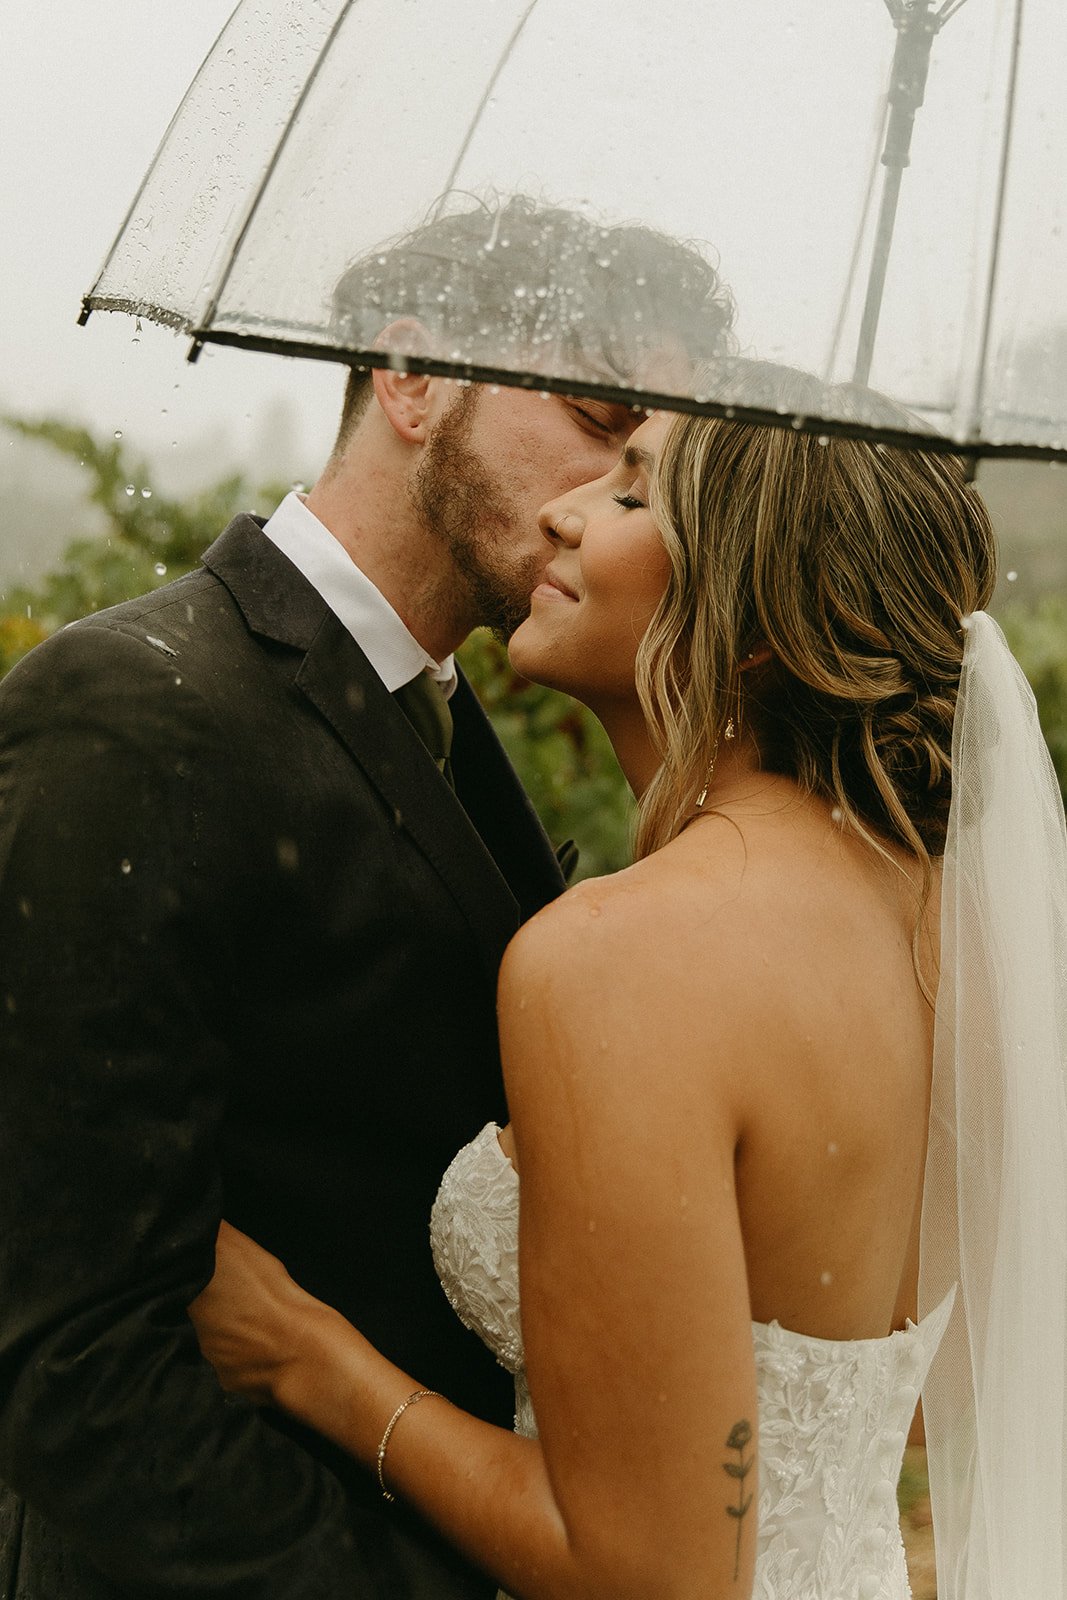 Beautiful Bride and groom photos in the rain